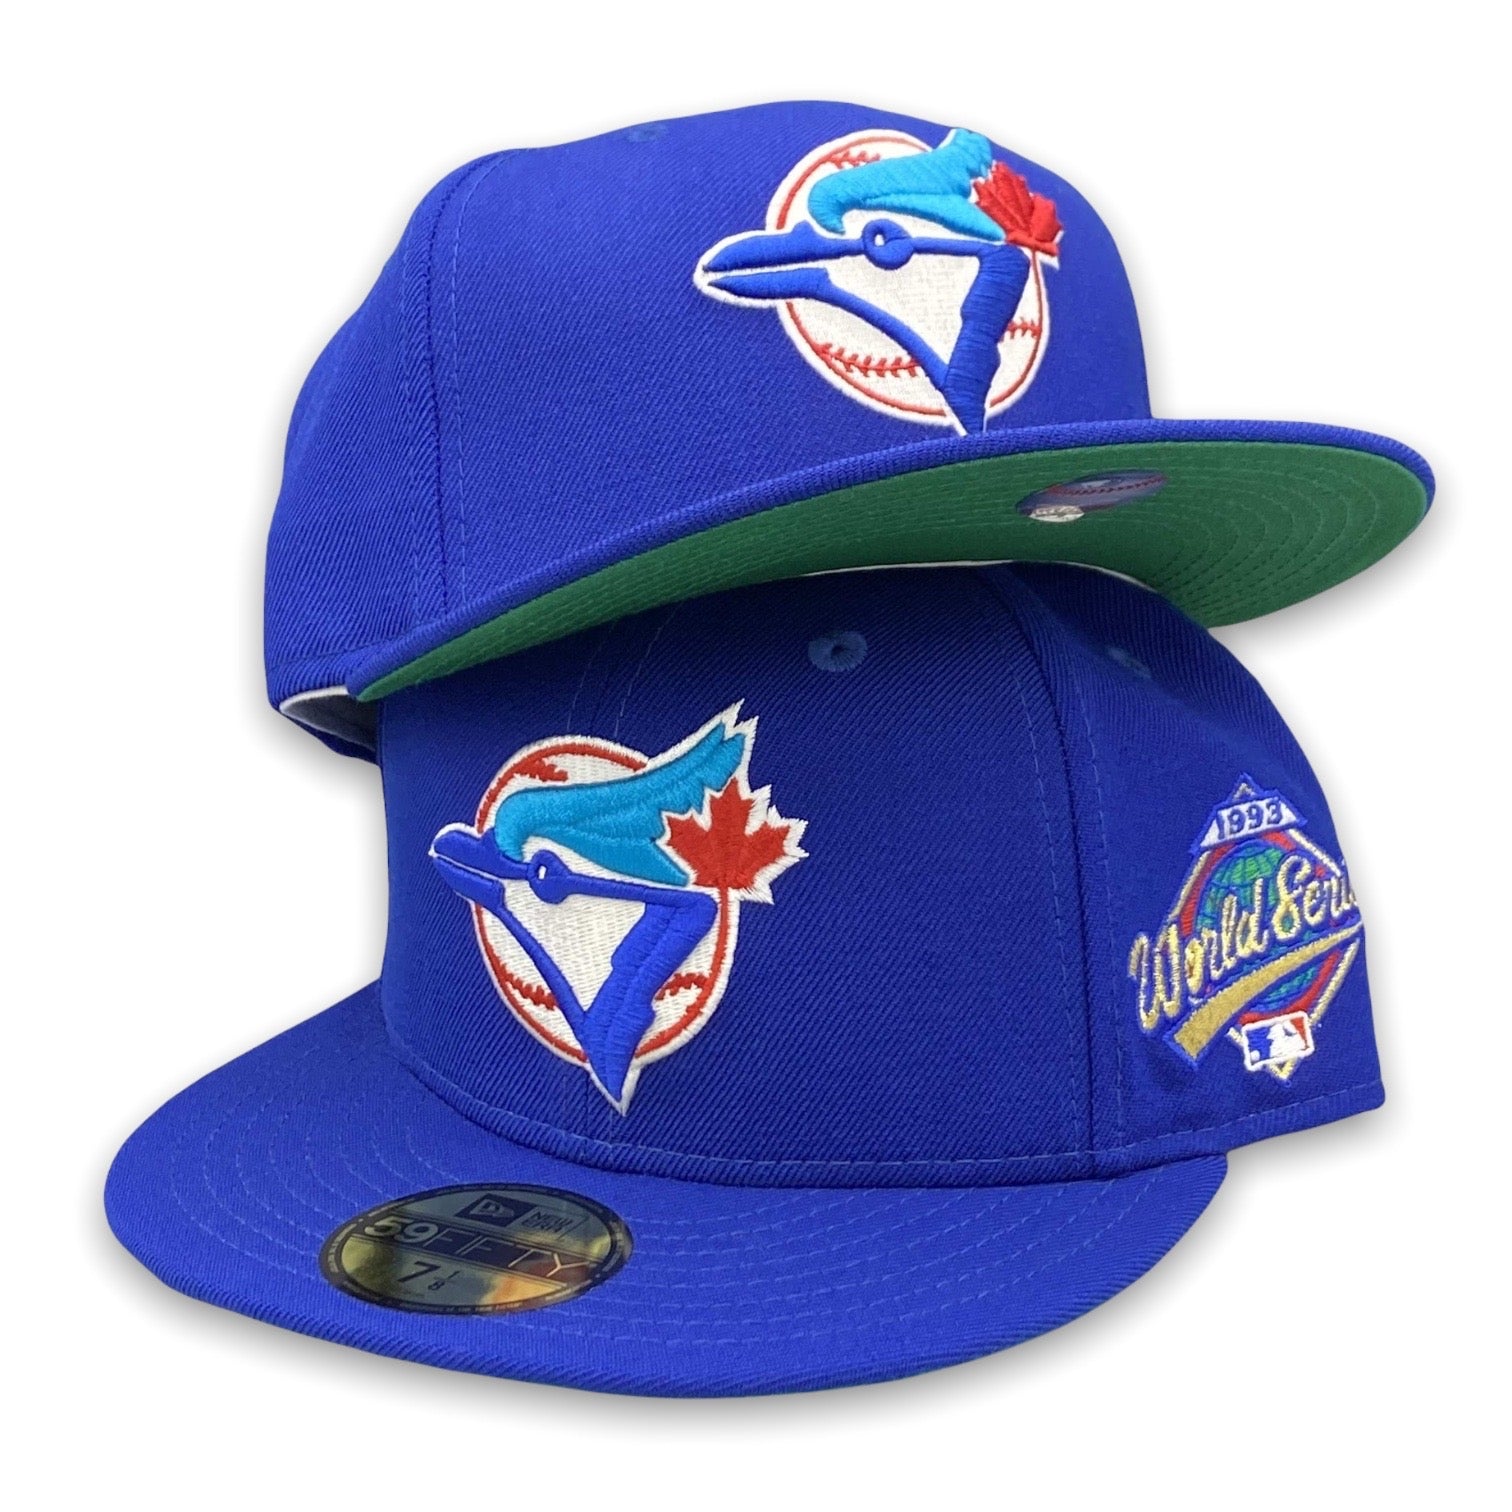 Toronto Blue Jays Merchandise, including jerseys and hats - Jays Journal